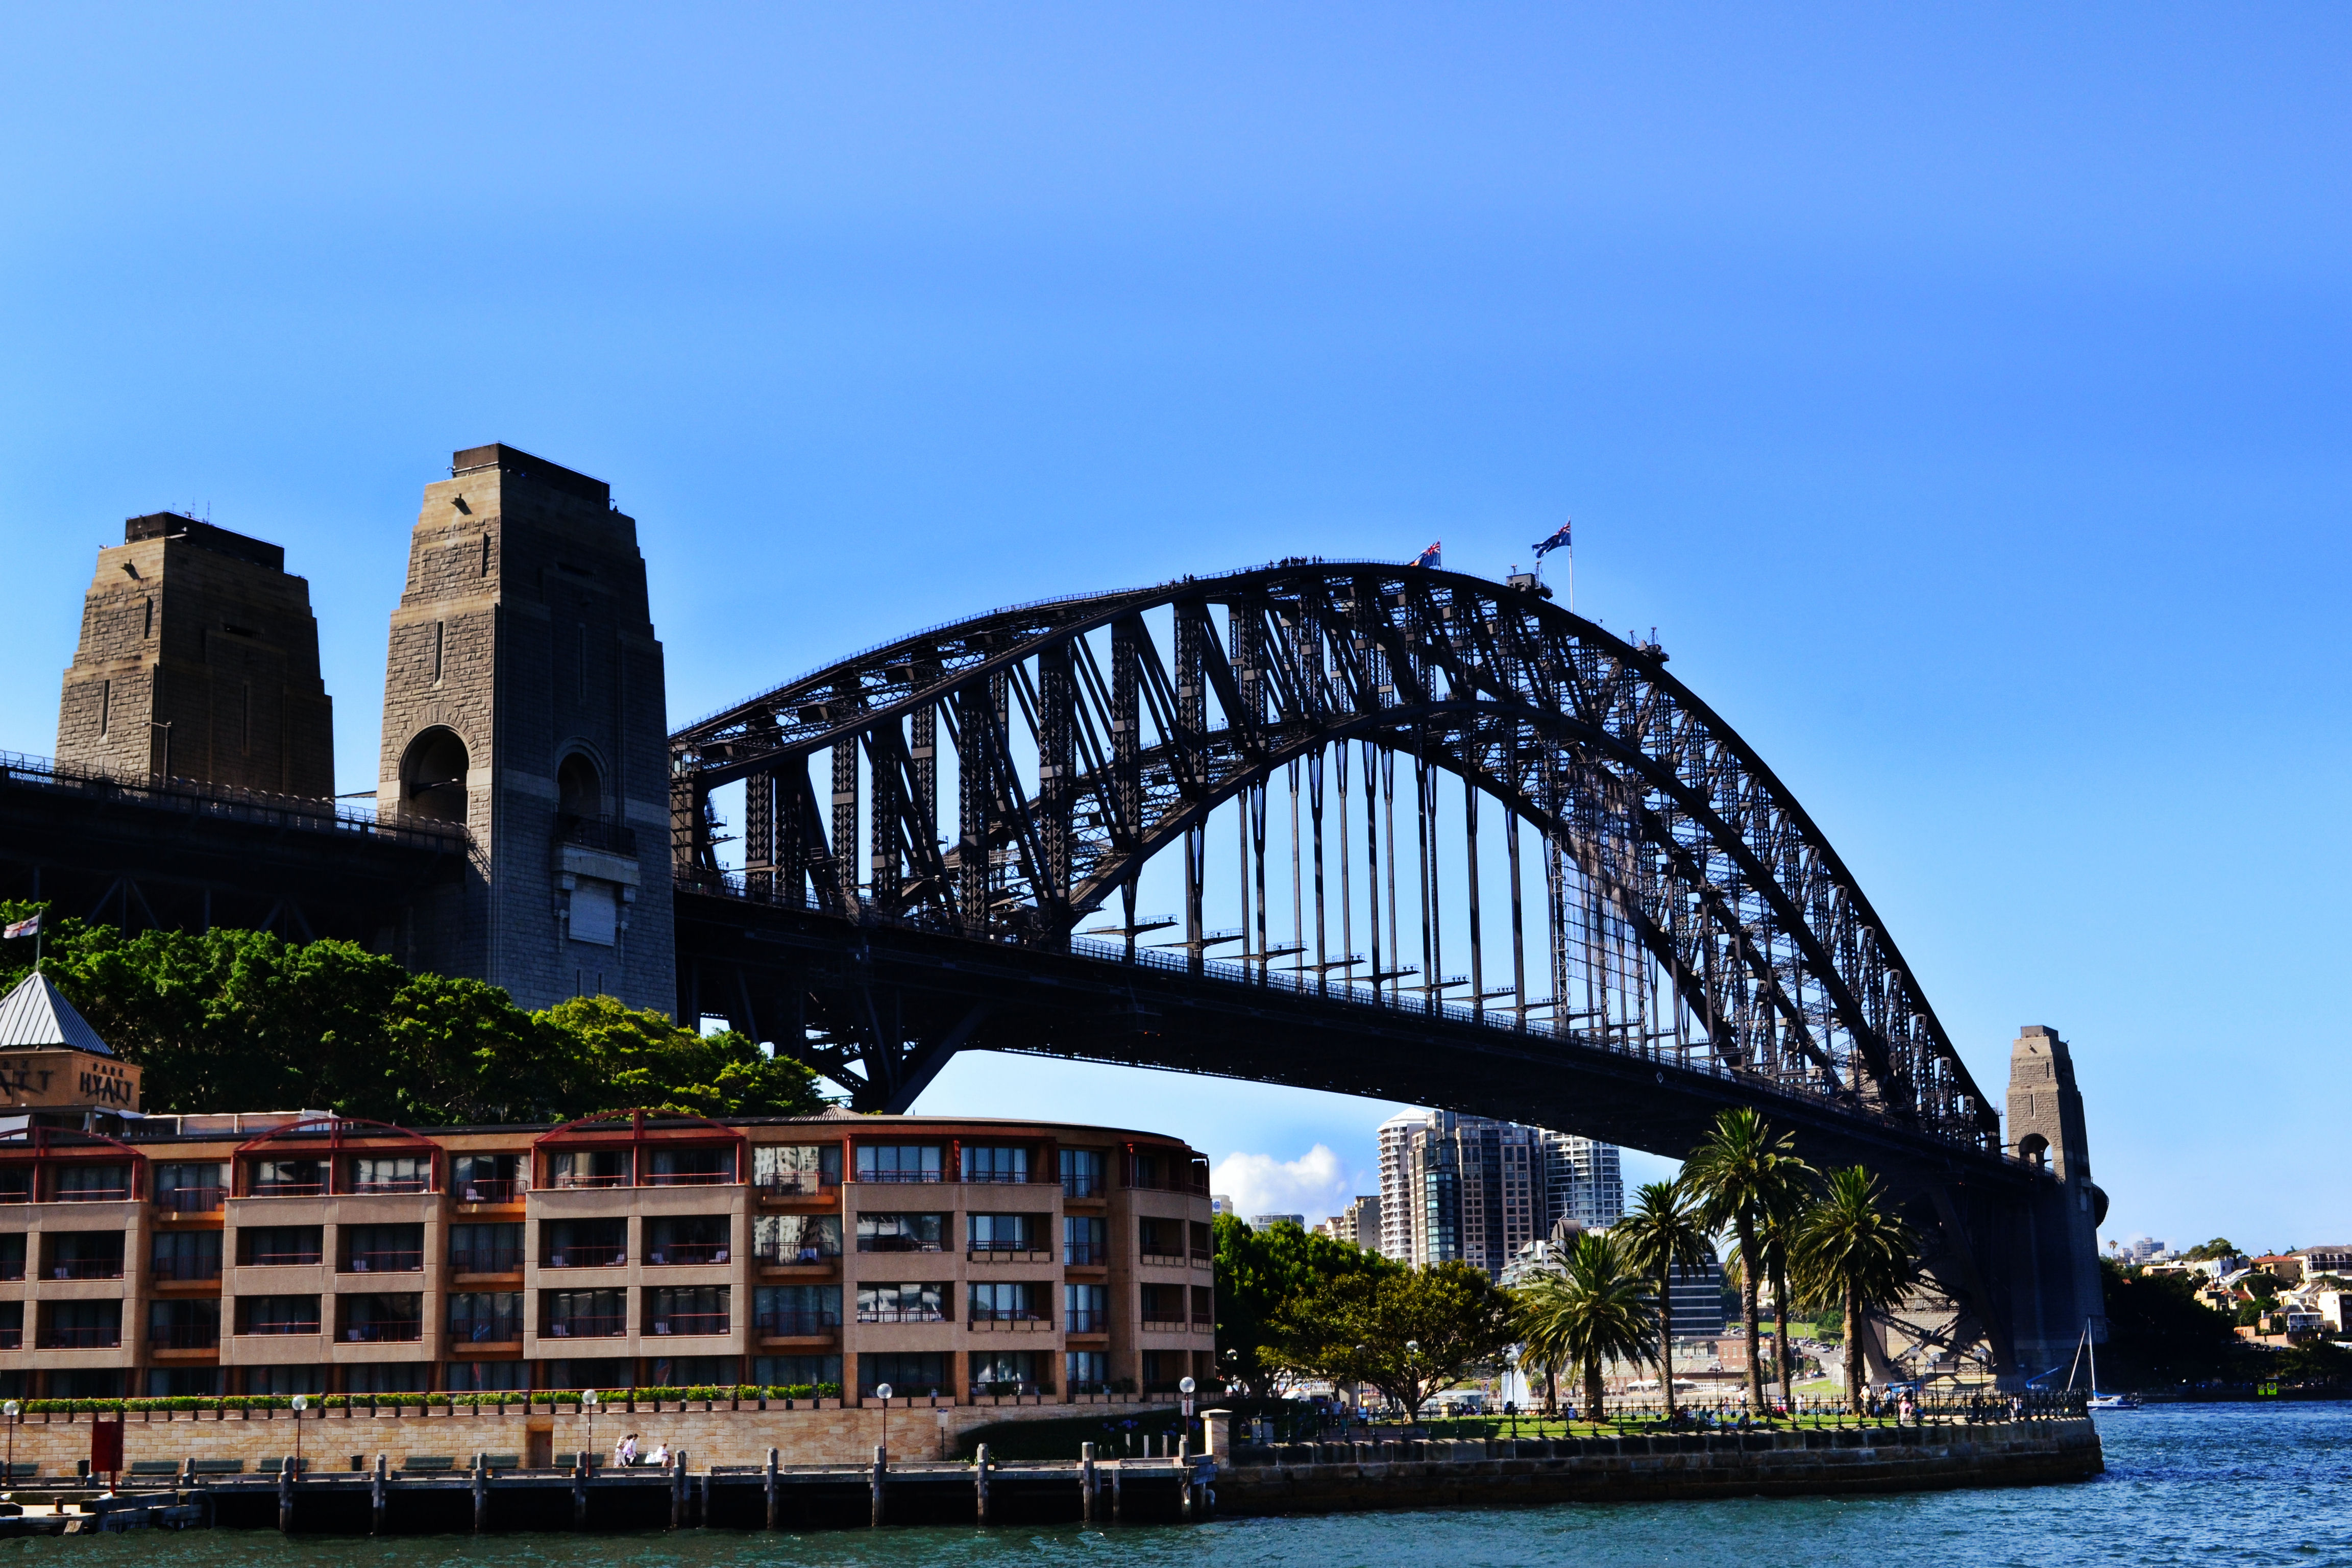 Sydney Harbour Bridge 4k Ultra HD Wallpaper. Background Image